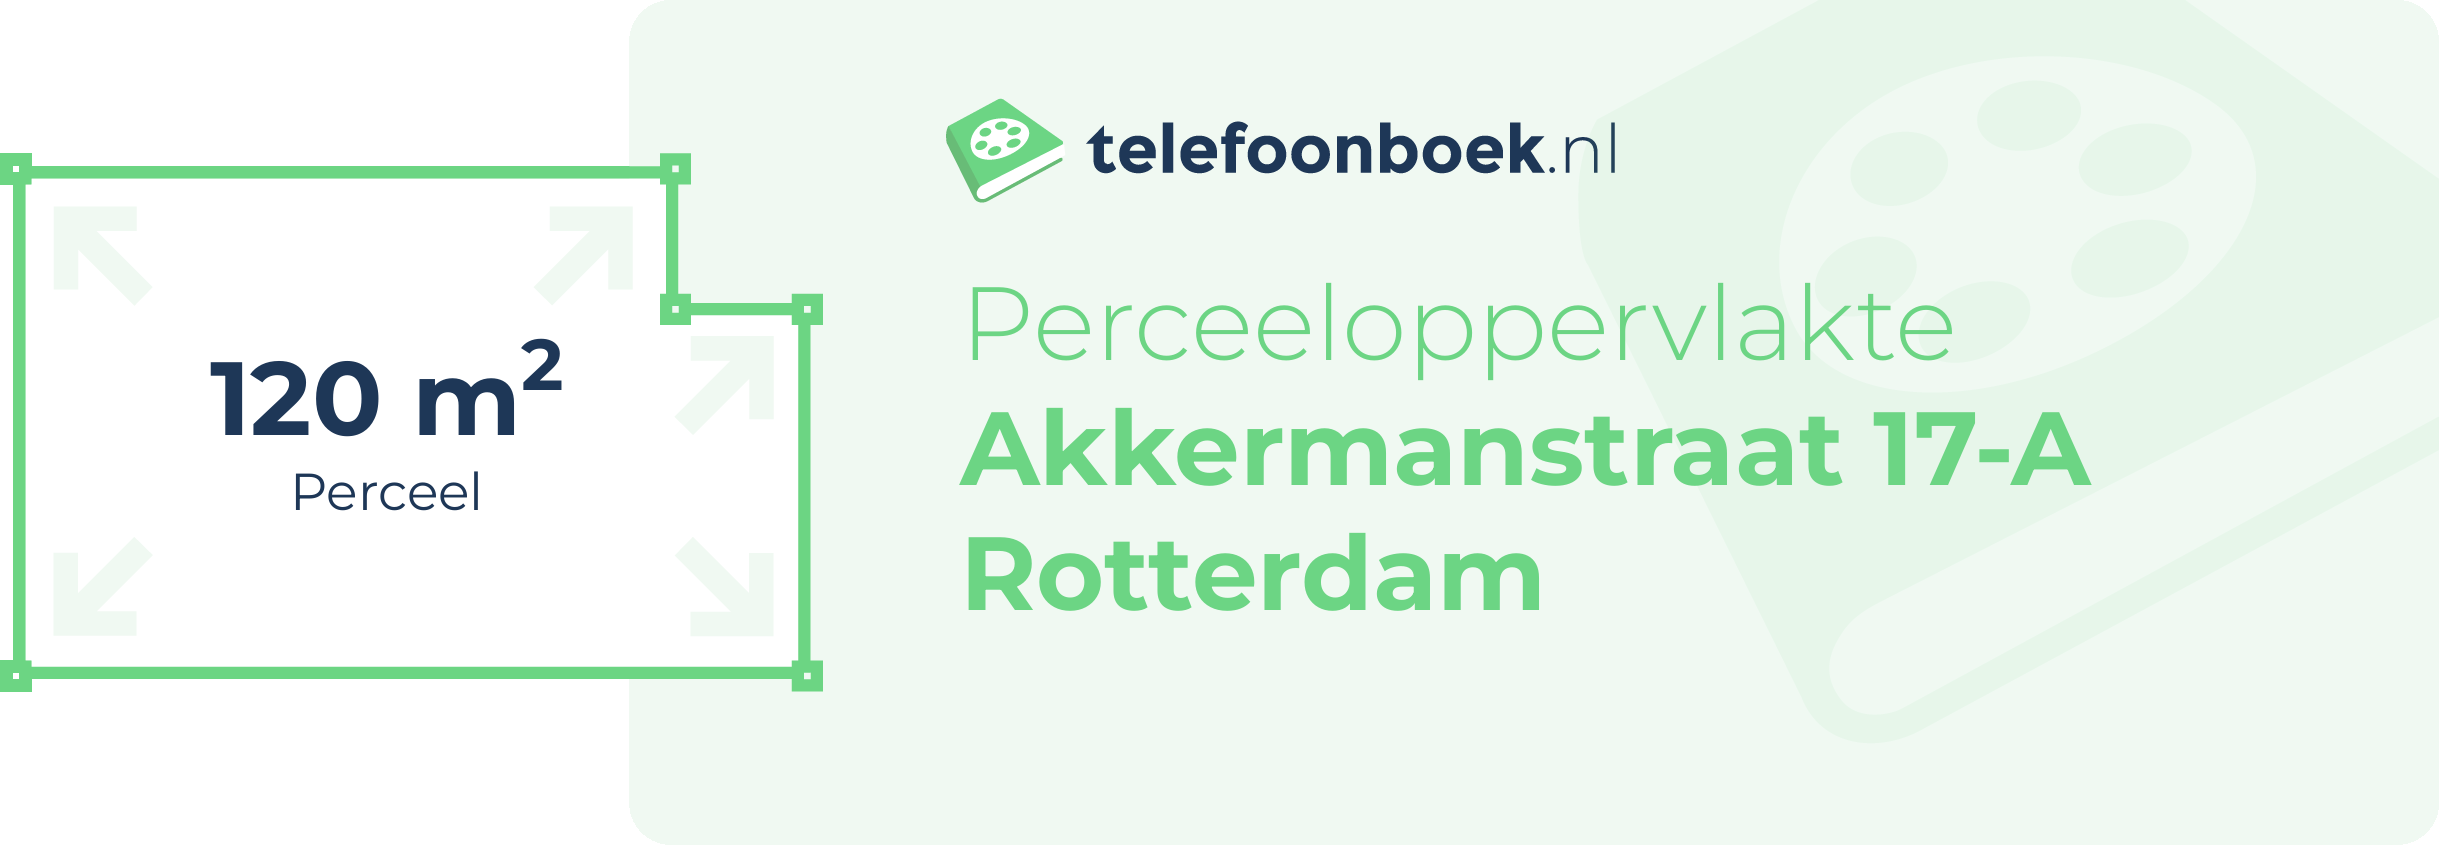 Perceeloppervlakte Akkermanstraat 17-A Rotterdam